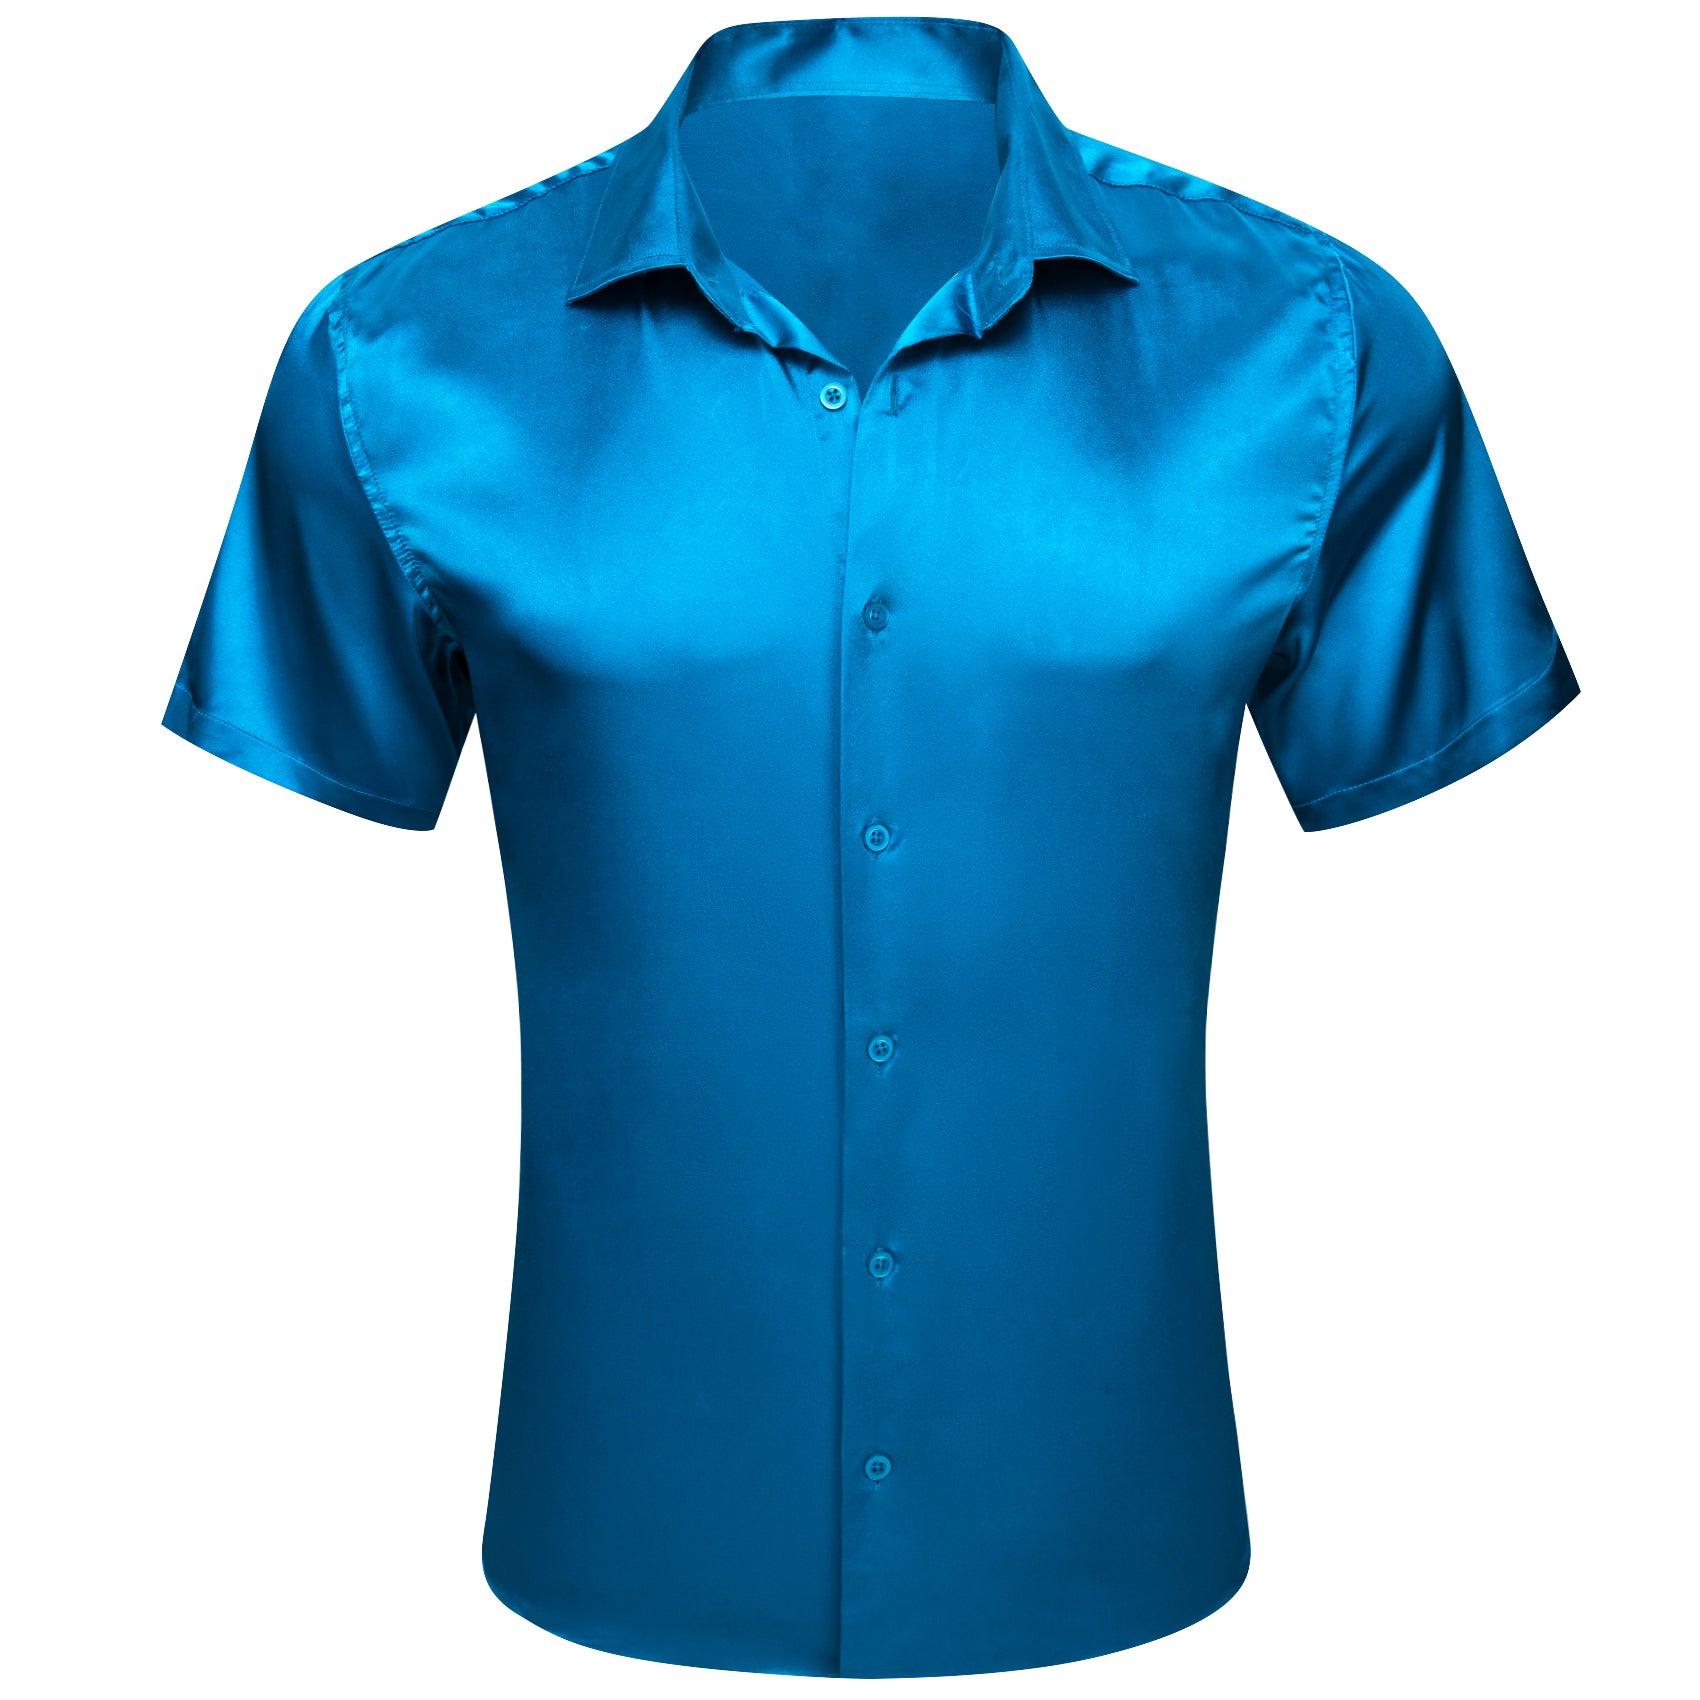 Barry.wang Sky Blue Solid Short Sleeves Shirt